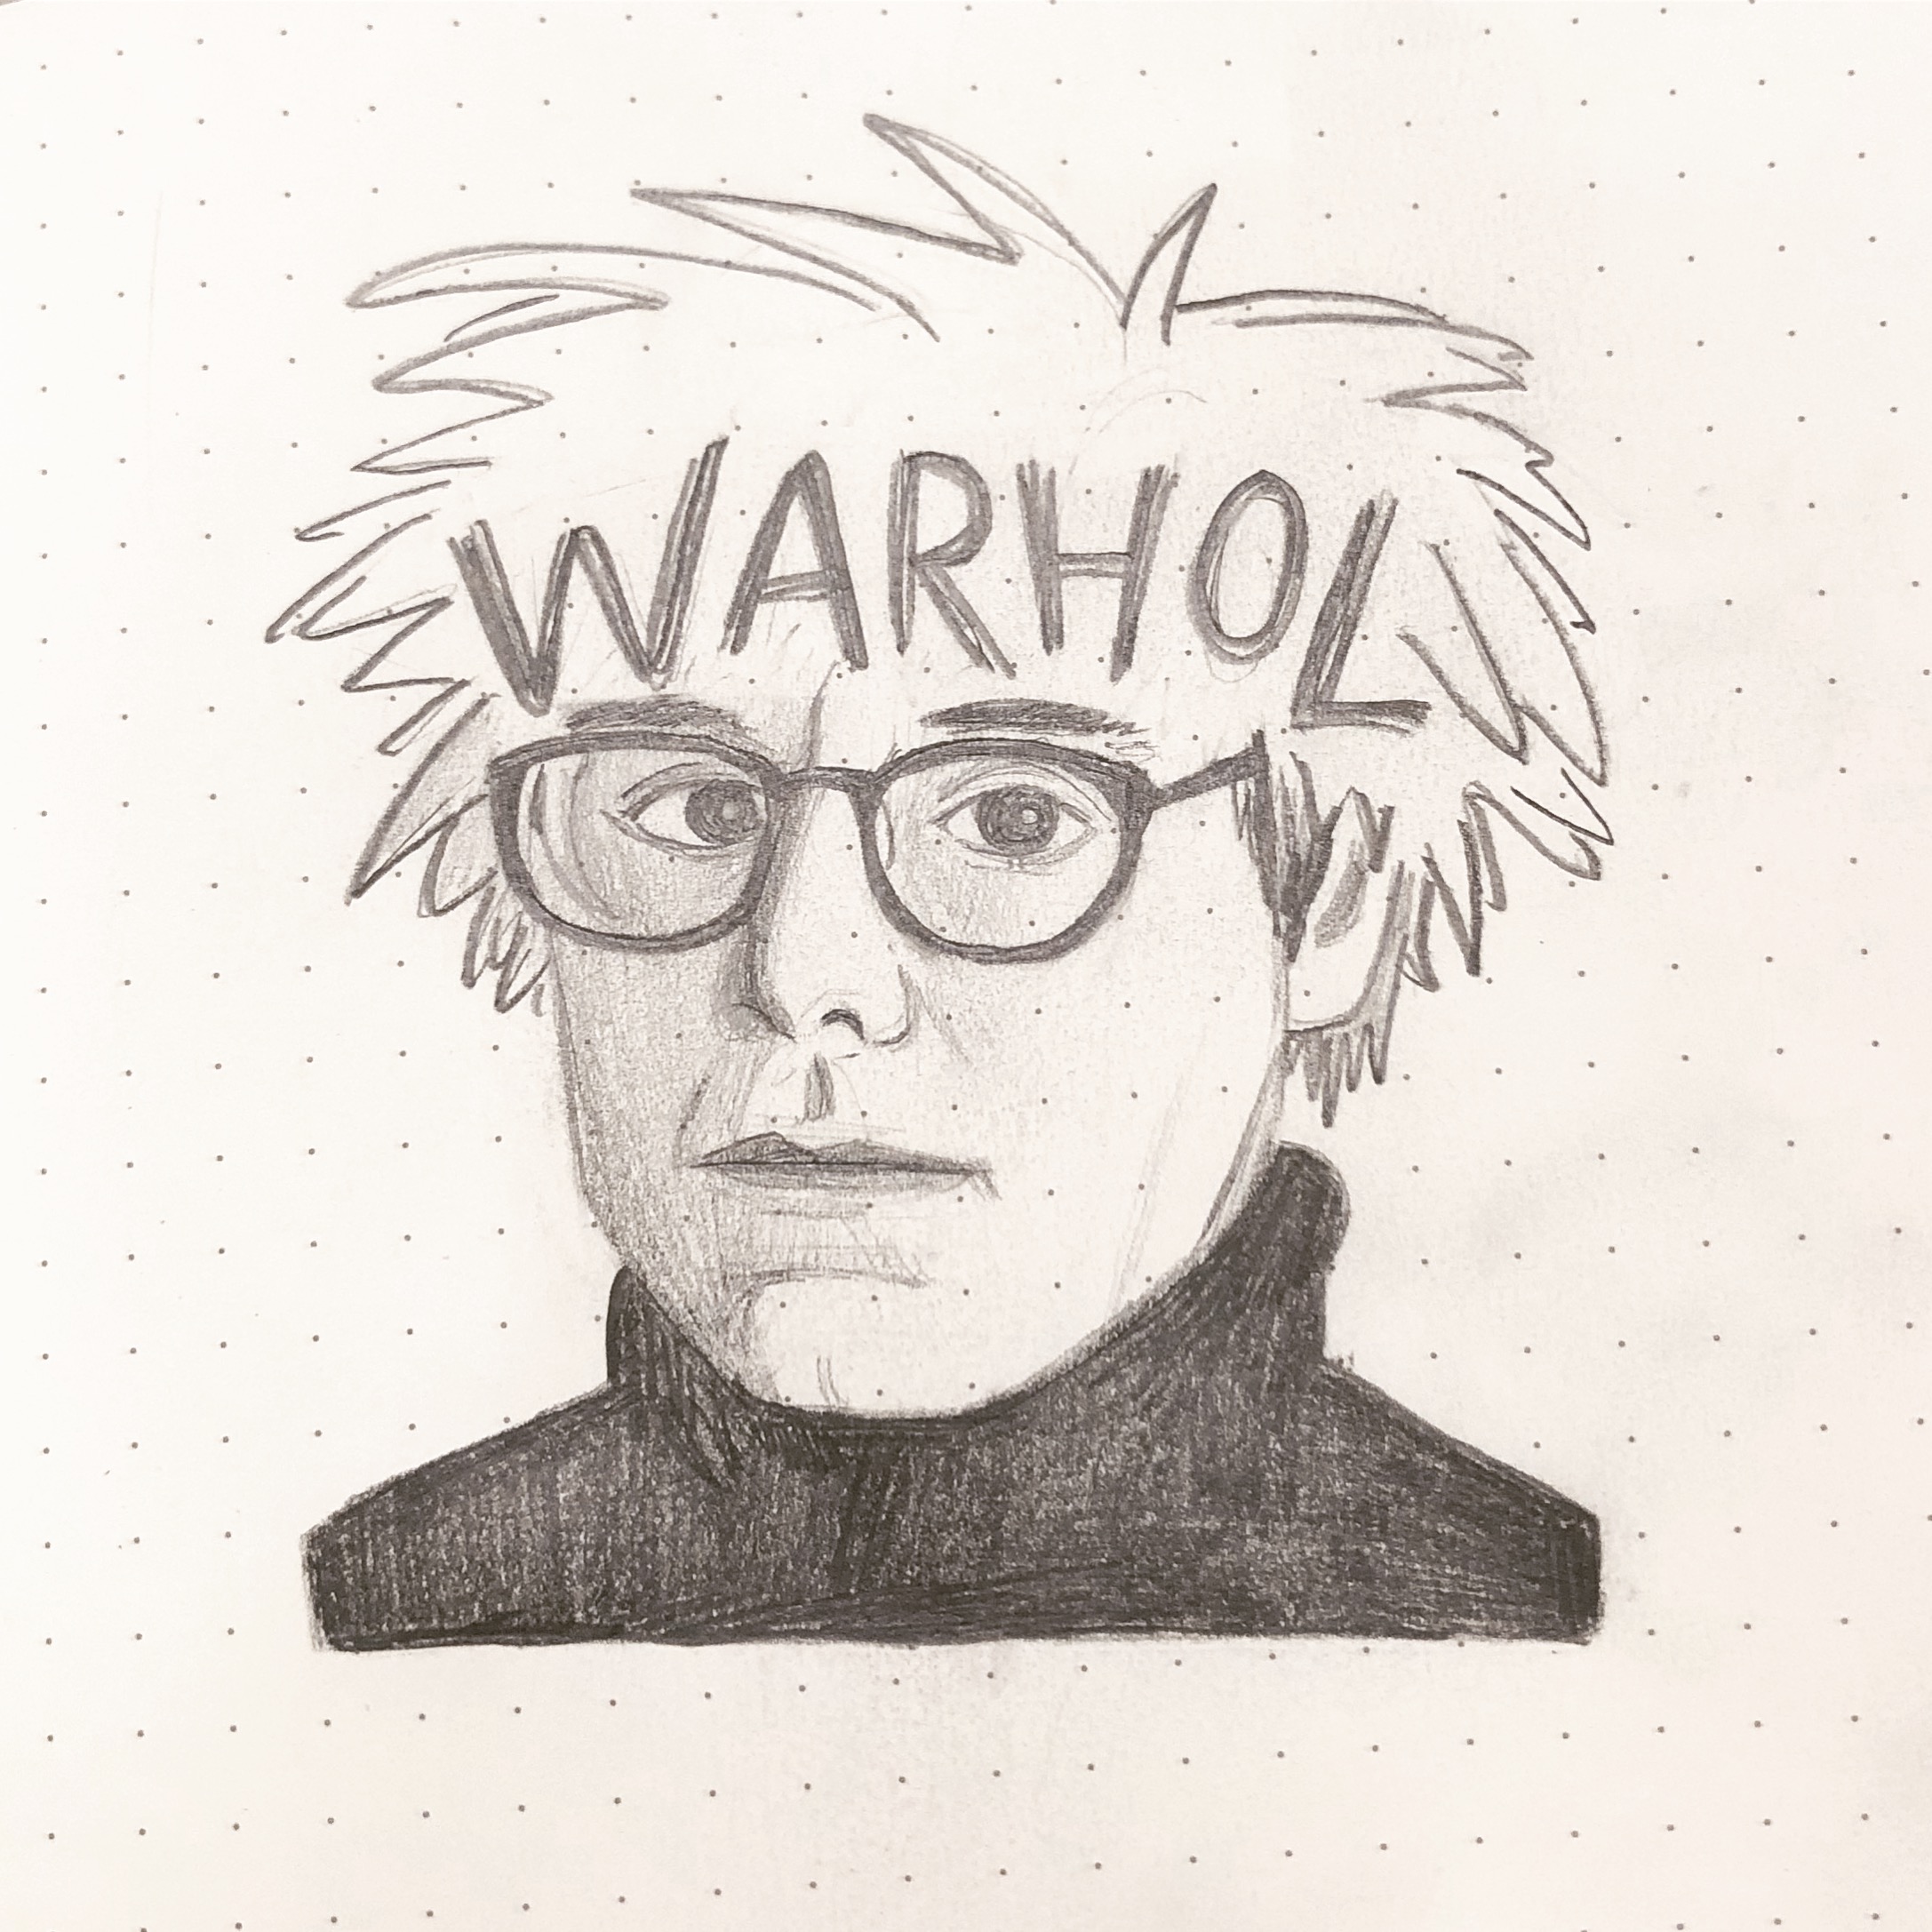 Andy Warhol portrait illustration